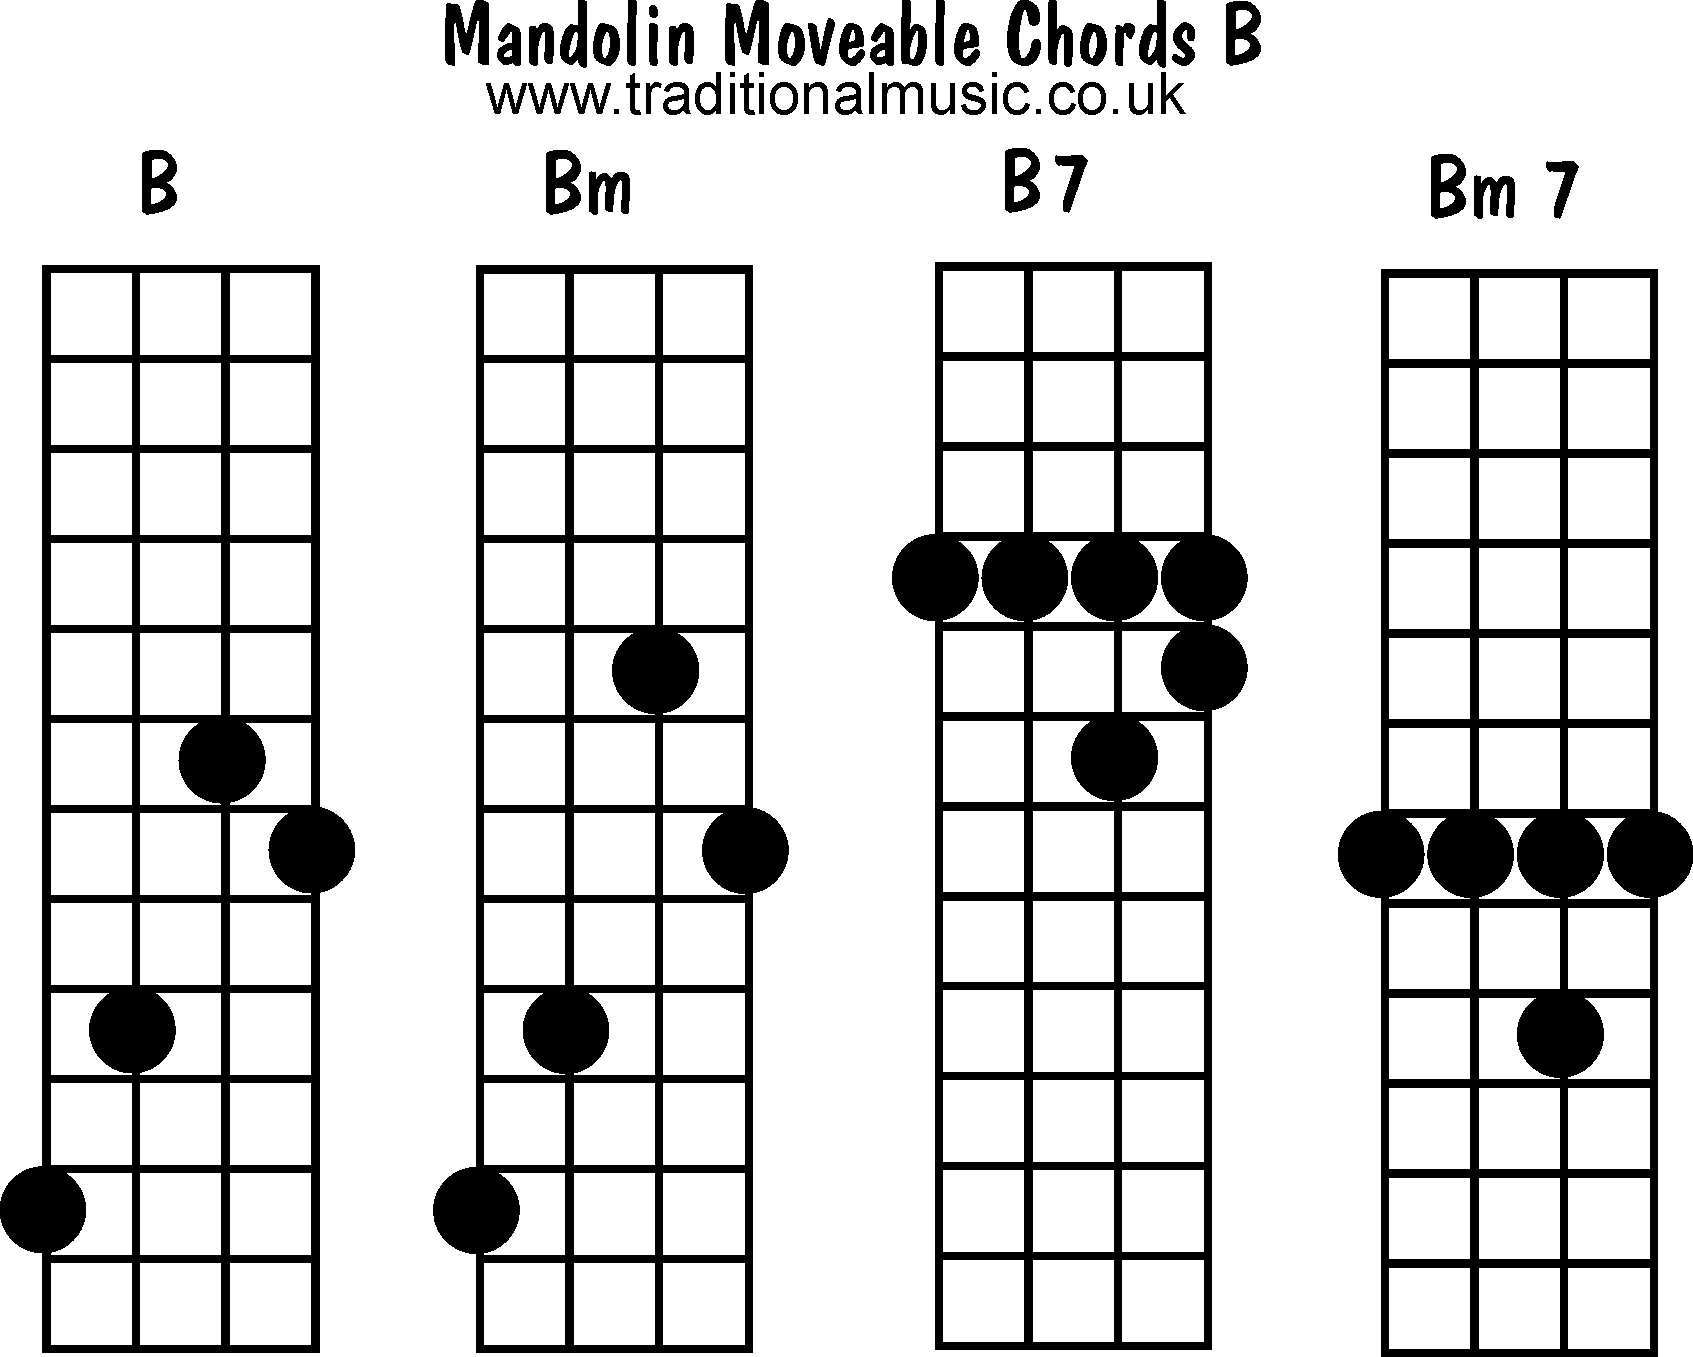 Moveable mandolin chords: B, Bm, B7, Bm7.